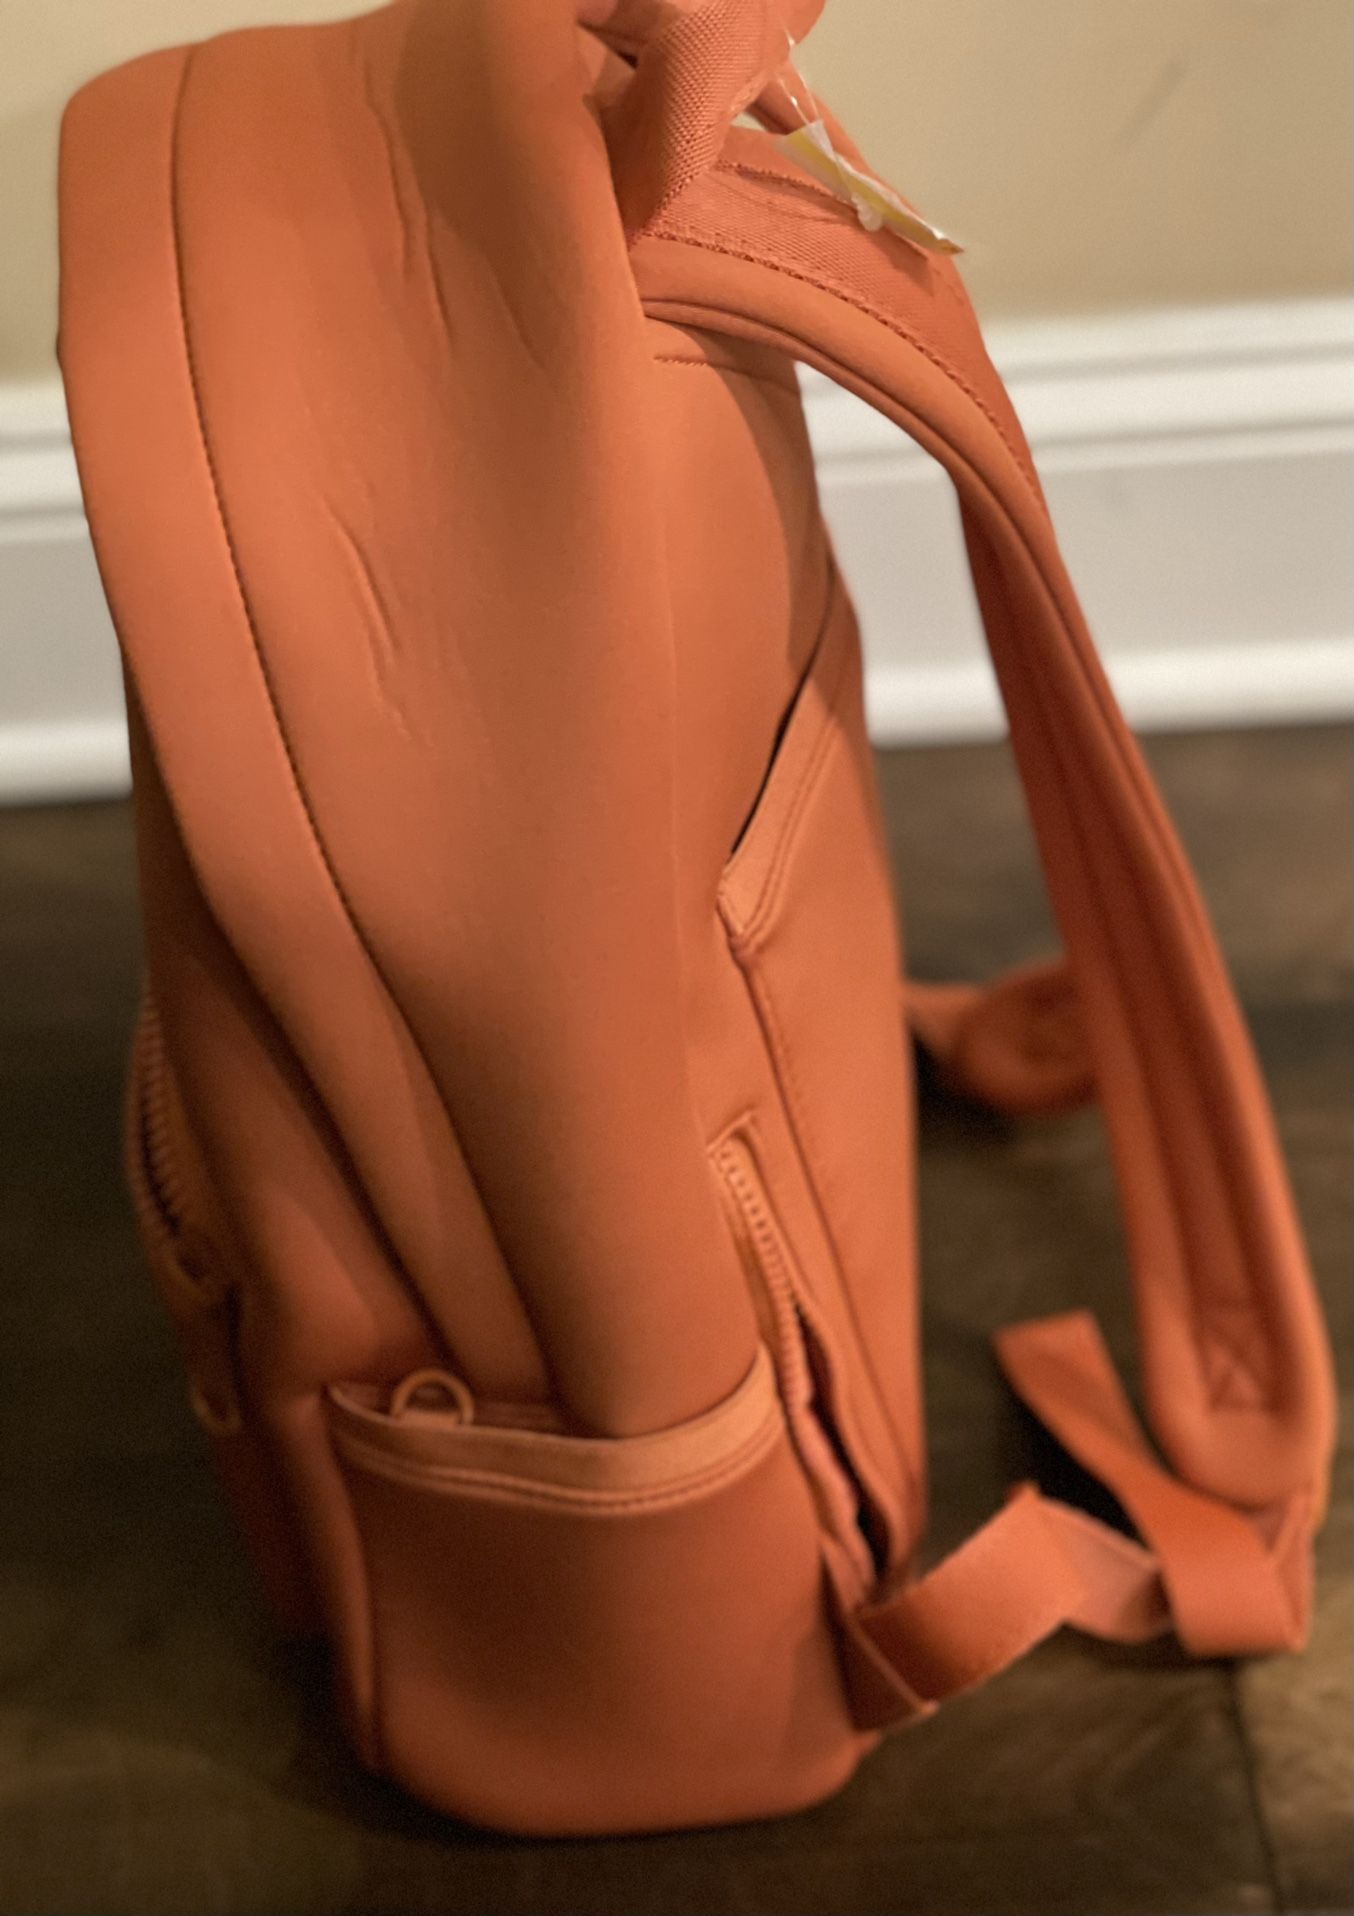 Dagne Dover Dakota Backpack Small In Bandage for Sale in New York, NY -  OfferUp